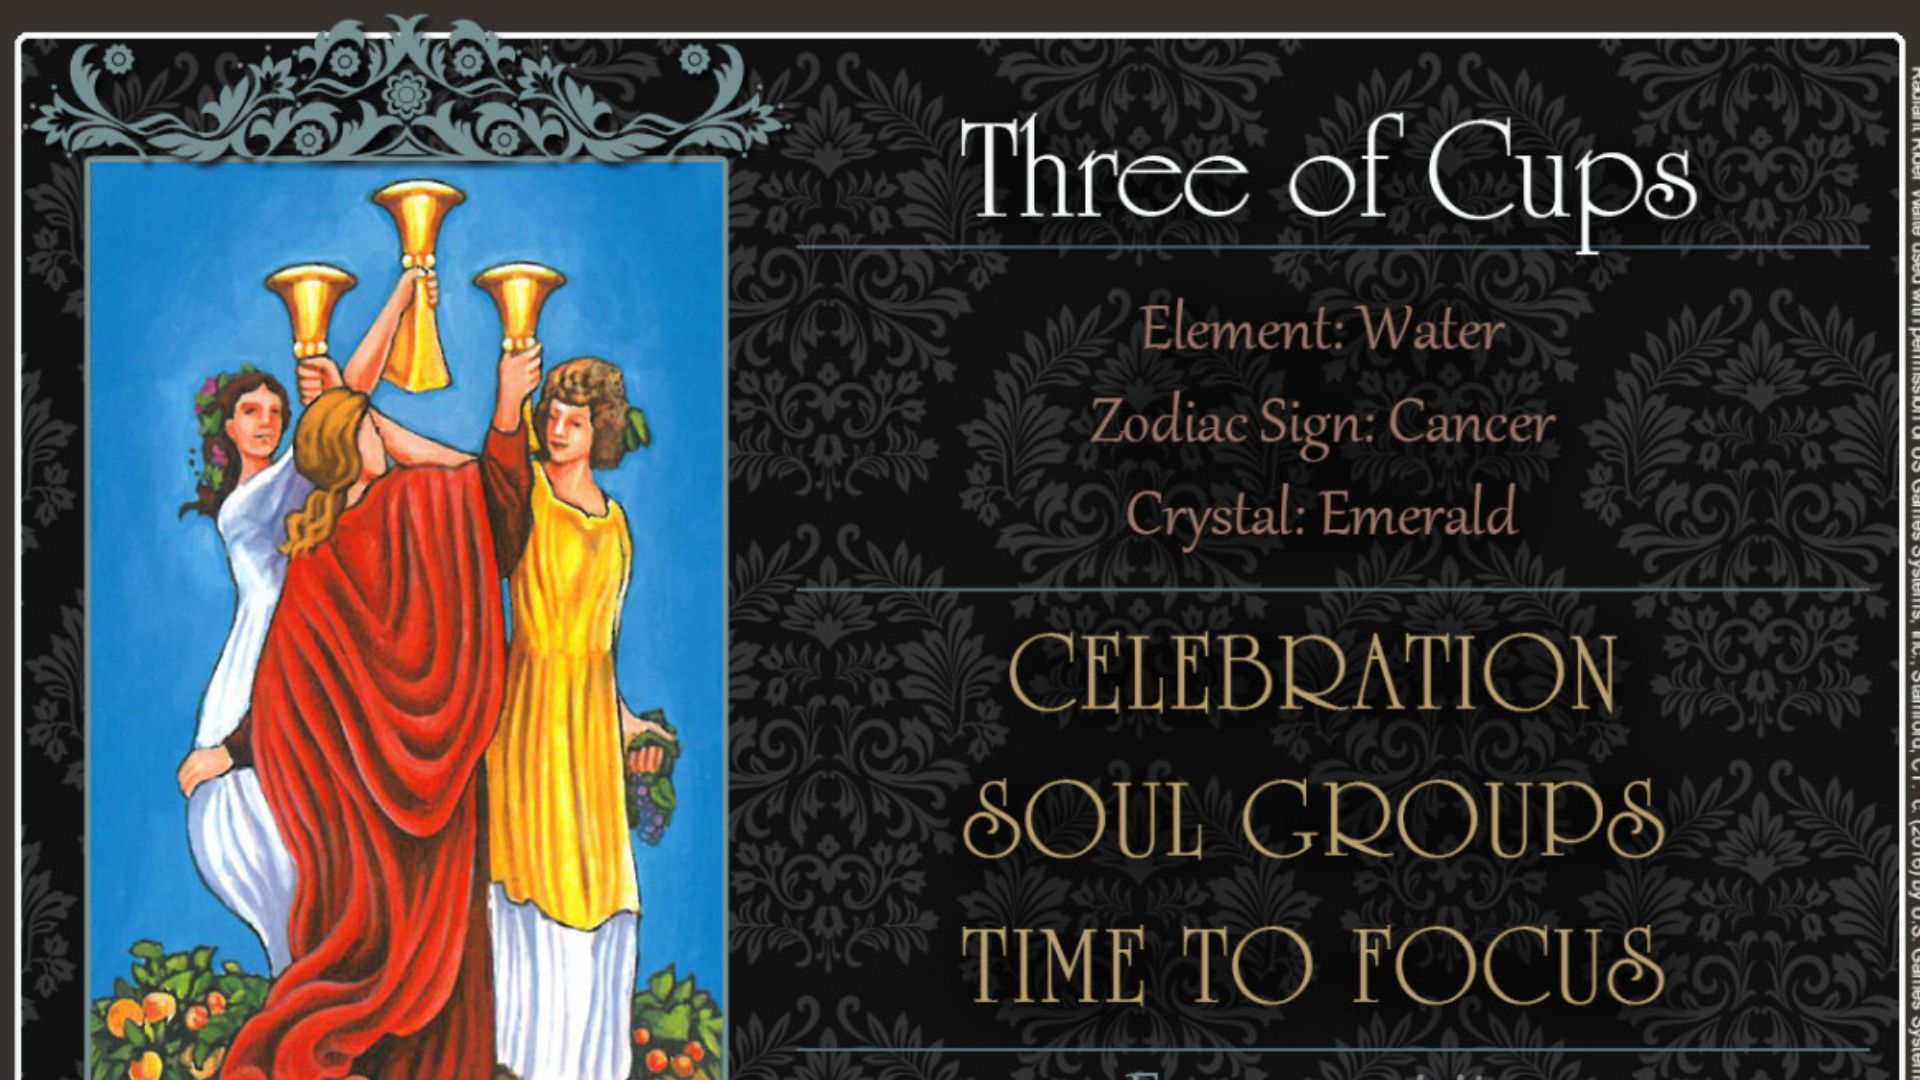 3 Of Cups - Celebrate Life's Joys